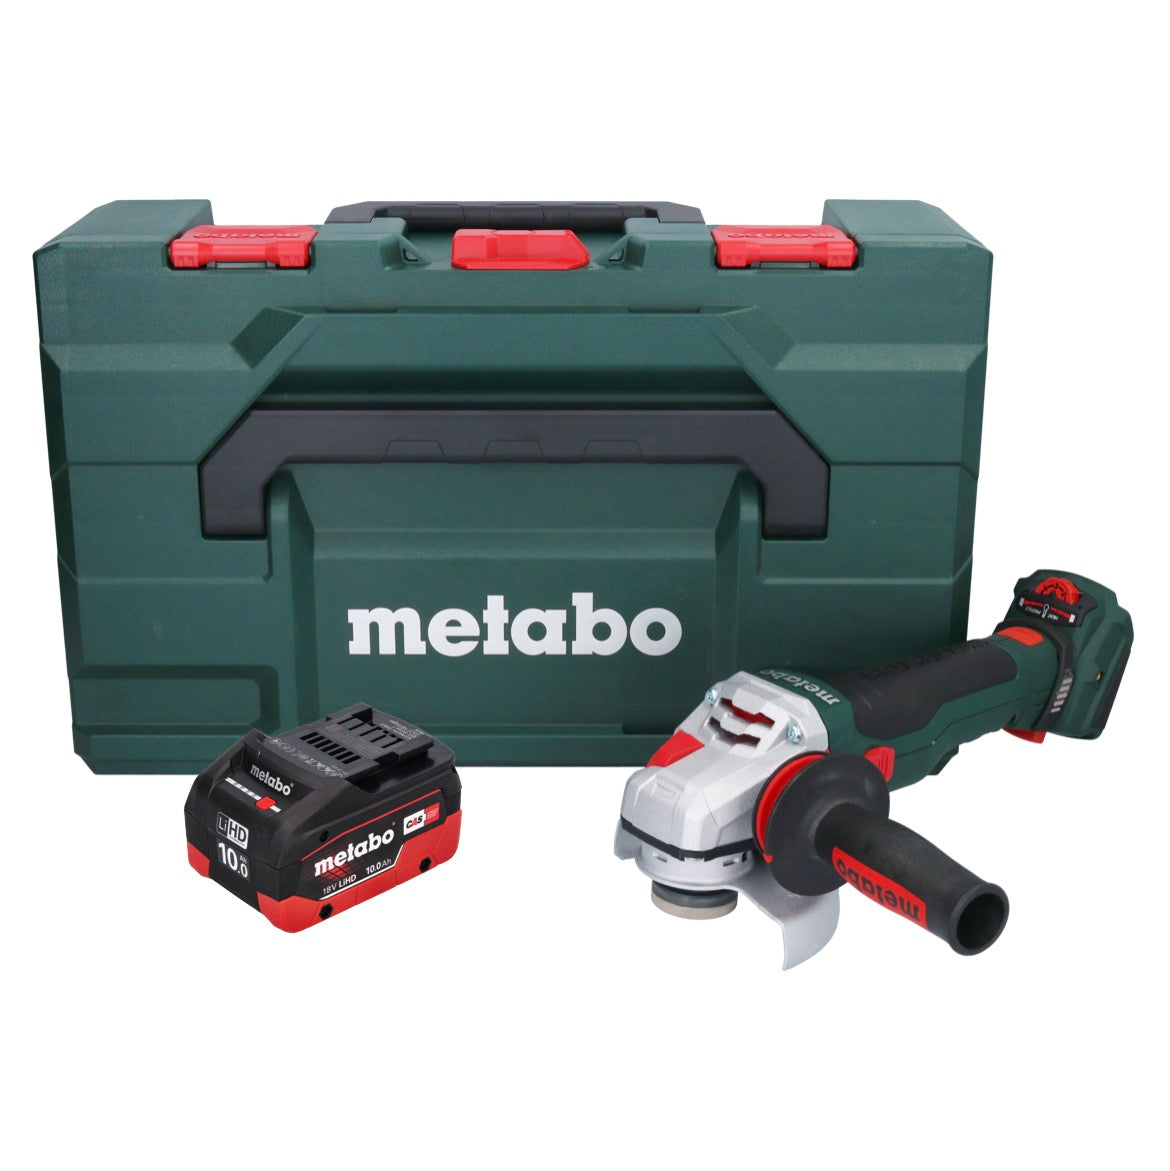 Metabo WVB 18 LTX BL 15-125 Quick Akku Winkelschleifer 18 V 125 mm Brushless + 1x Akku 10,0 Ah + metaBOX - ohne Ladegerät